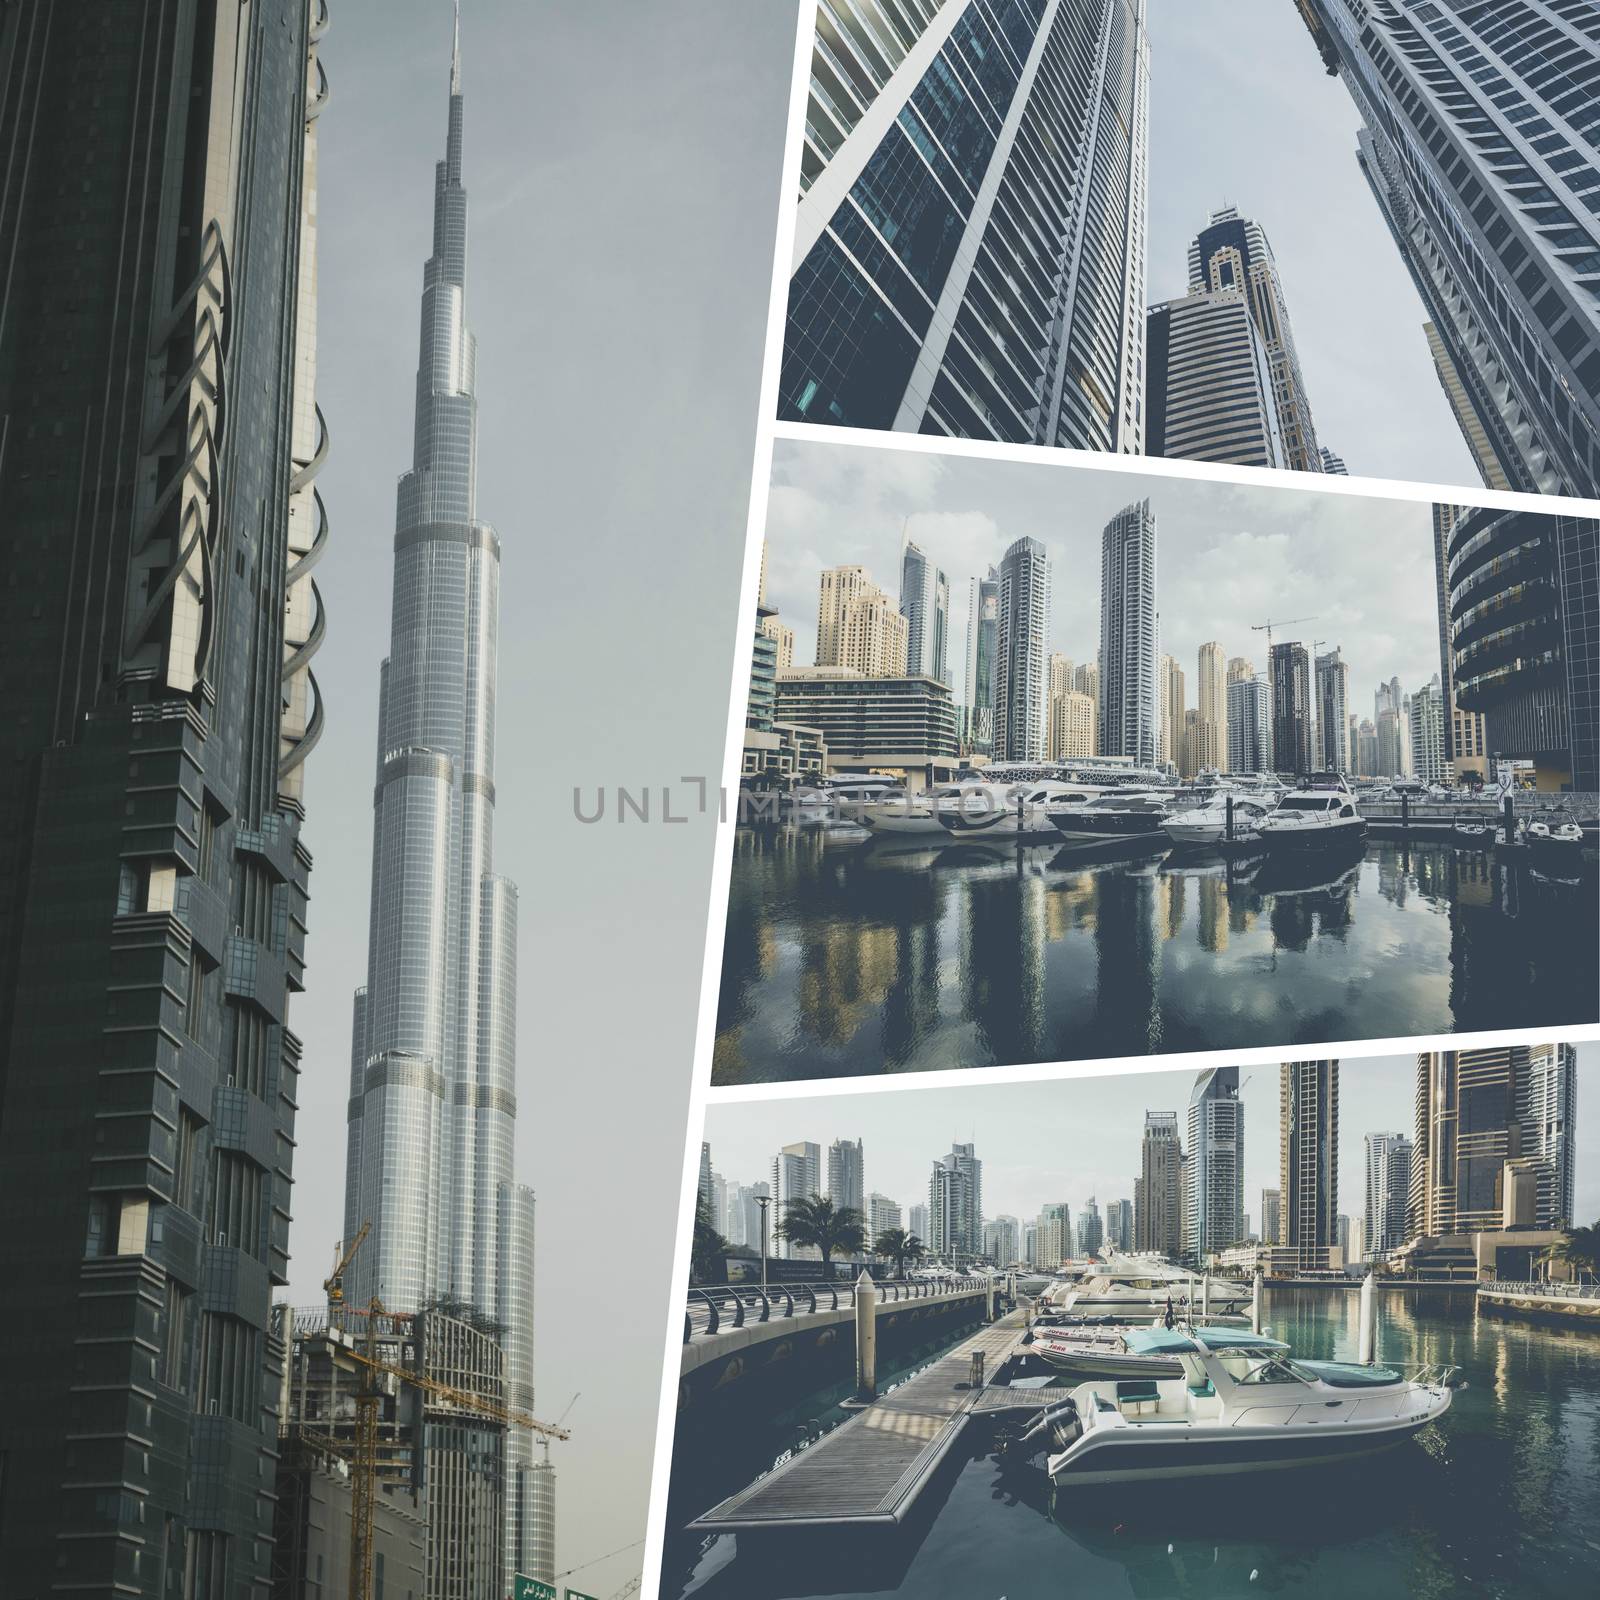 Collage of photos from Dubai. UAE

